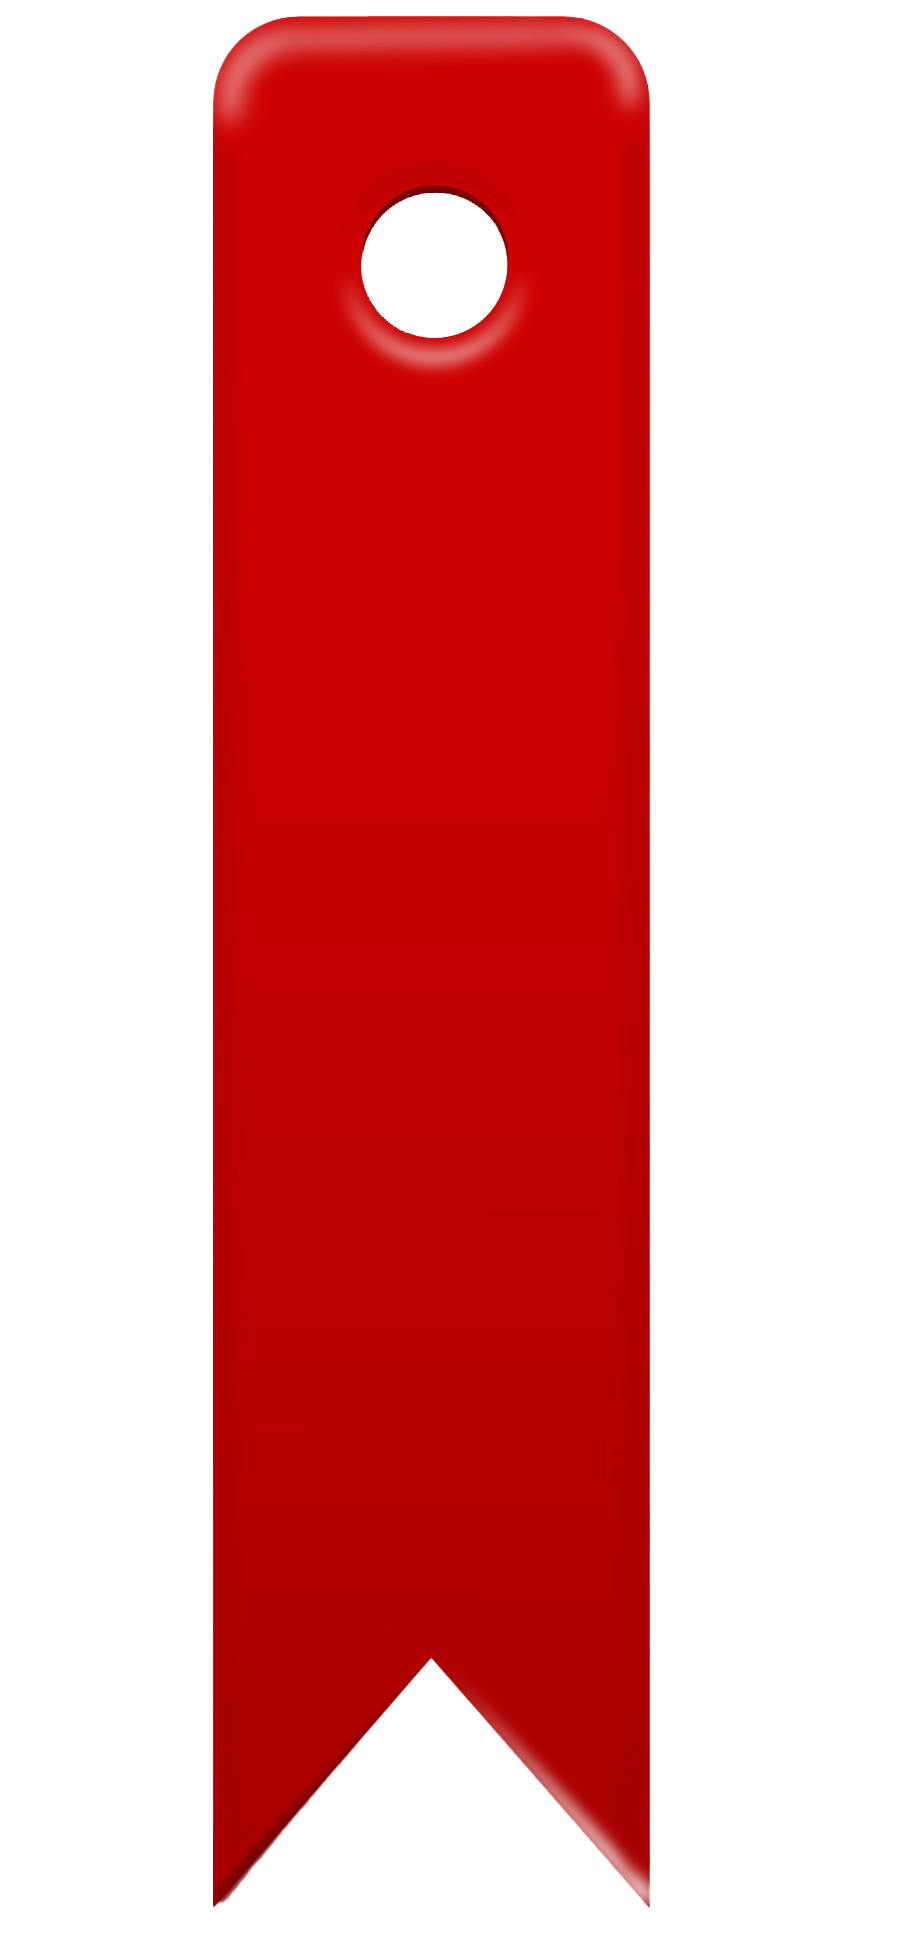 Rode bladwijzer PNG Picture